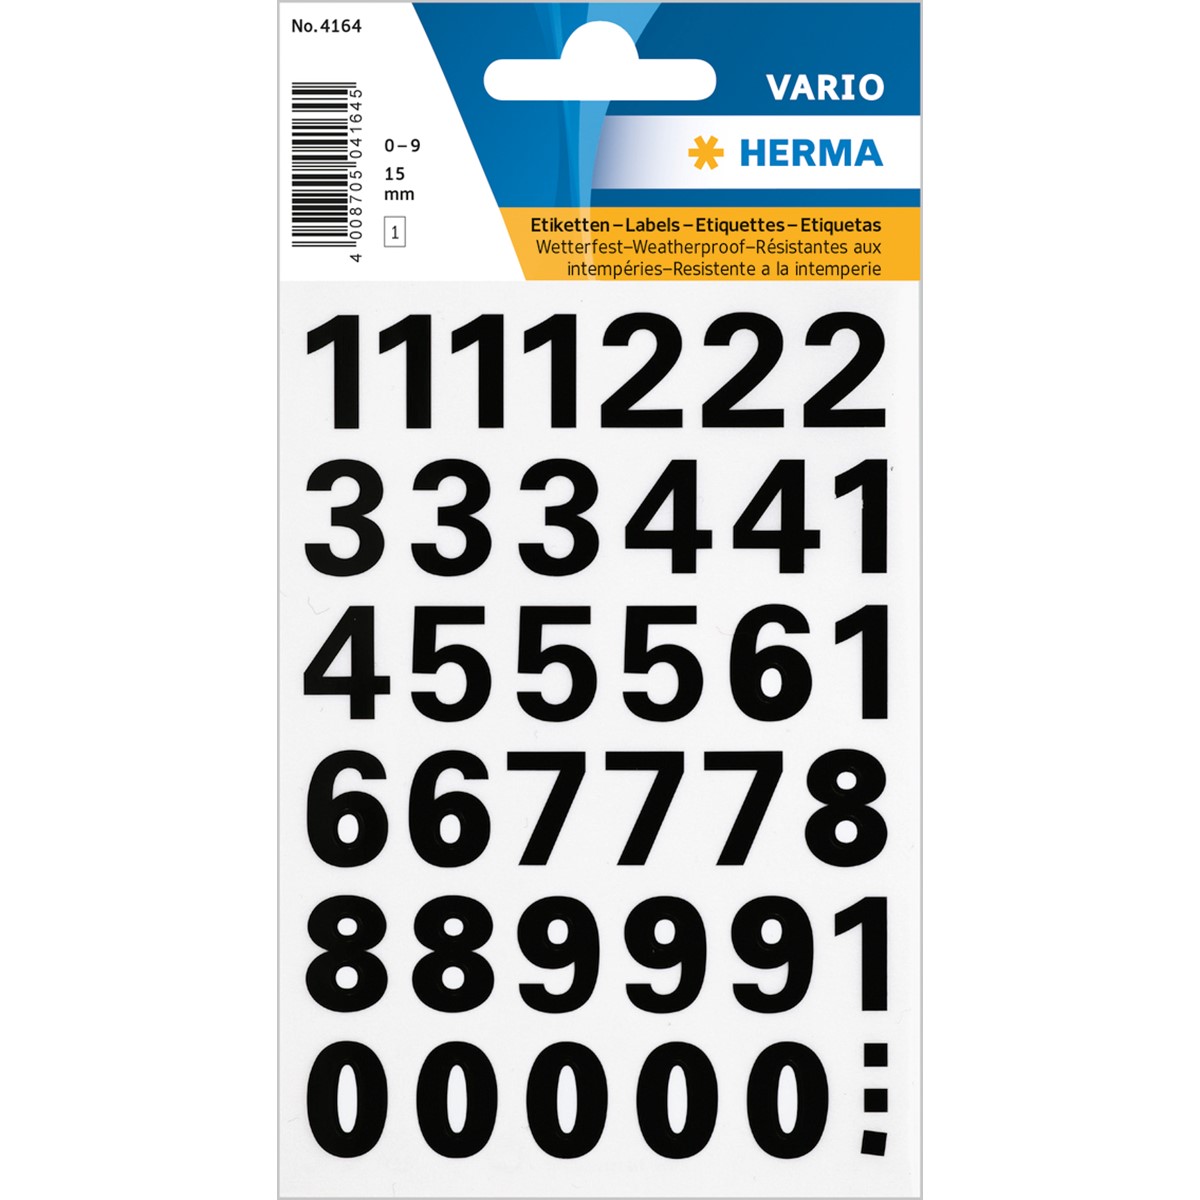 HERMA 4164 - Zahlen Etiketten, schwarz, 15 mm, 1 Blatt